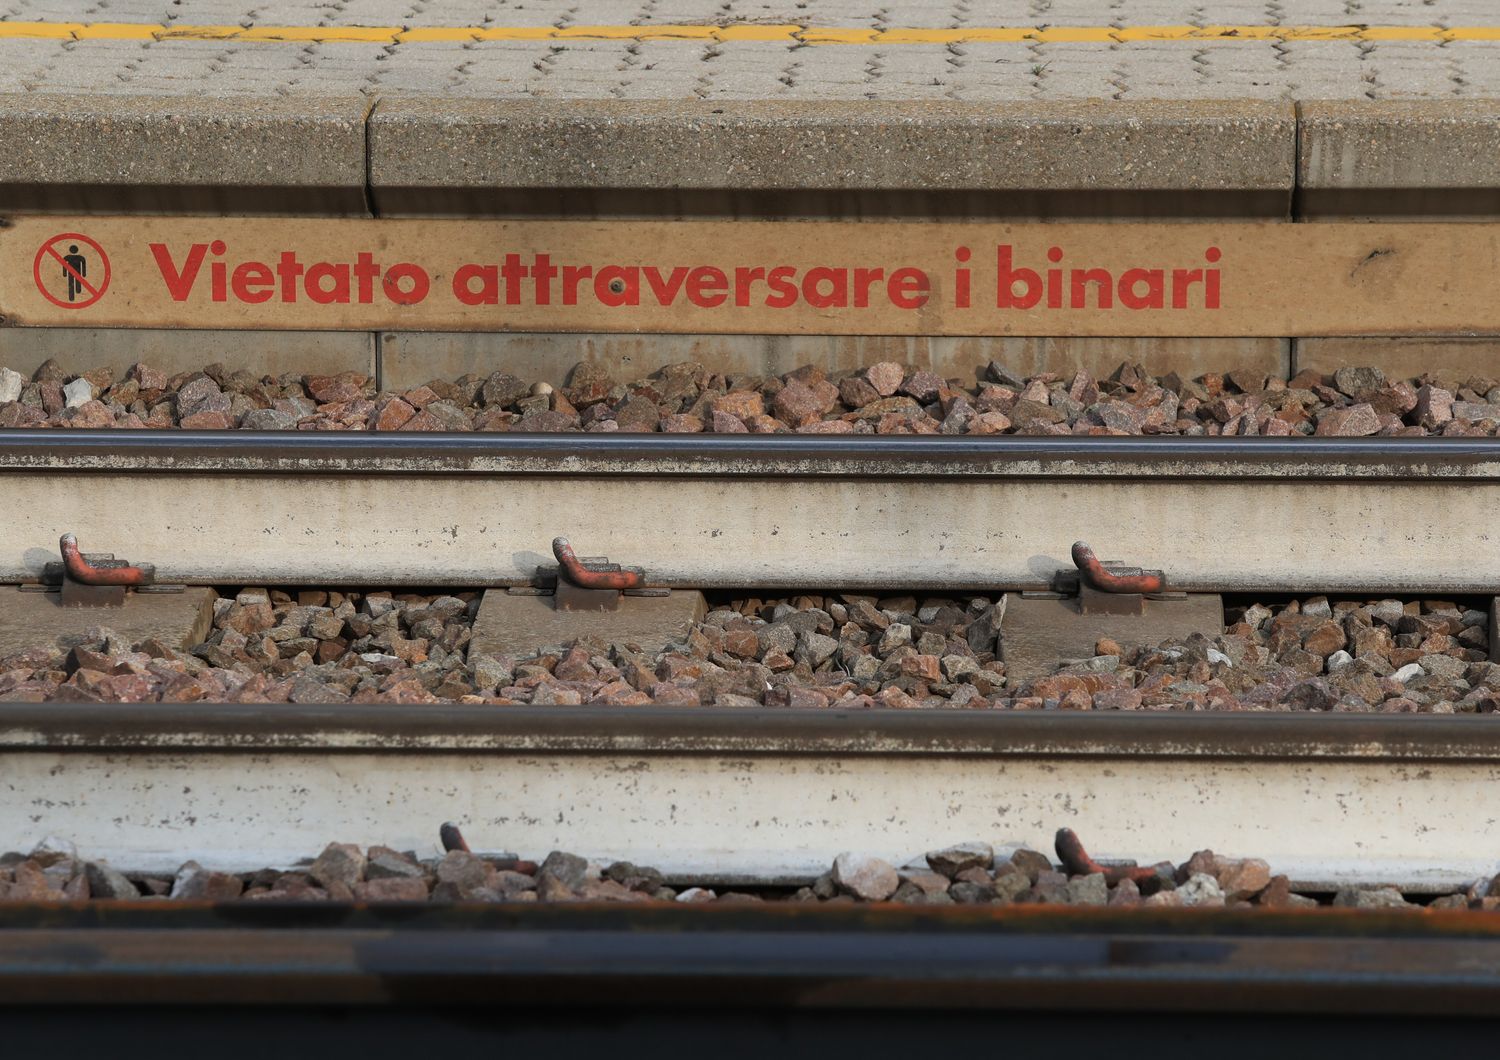 i binari in una stazione ferroviaria italiana&nbsp;